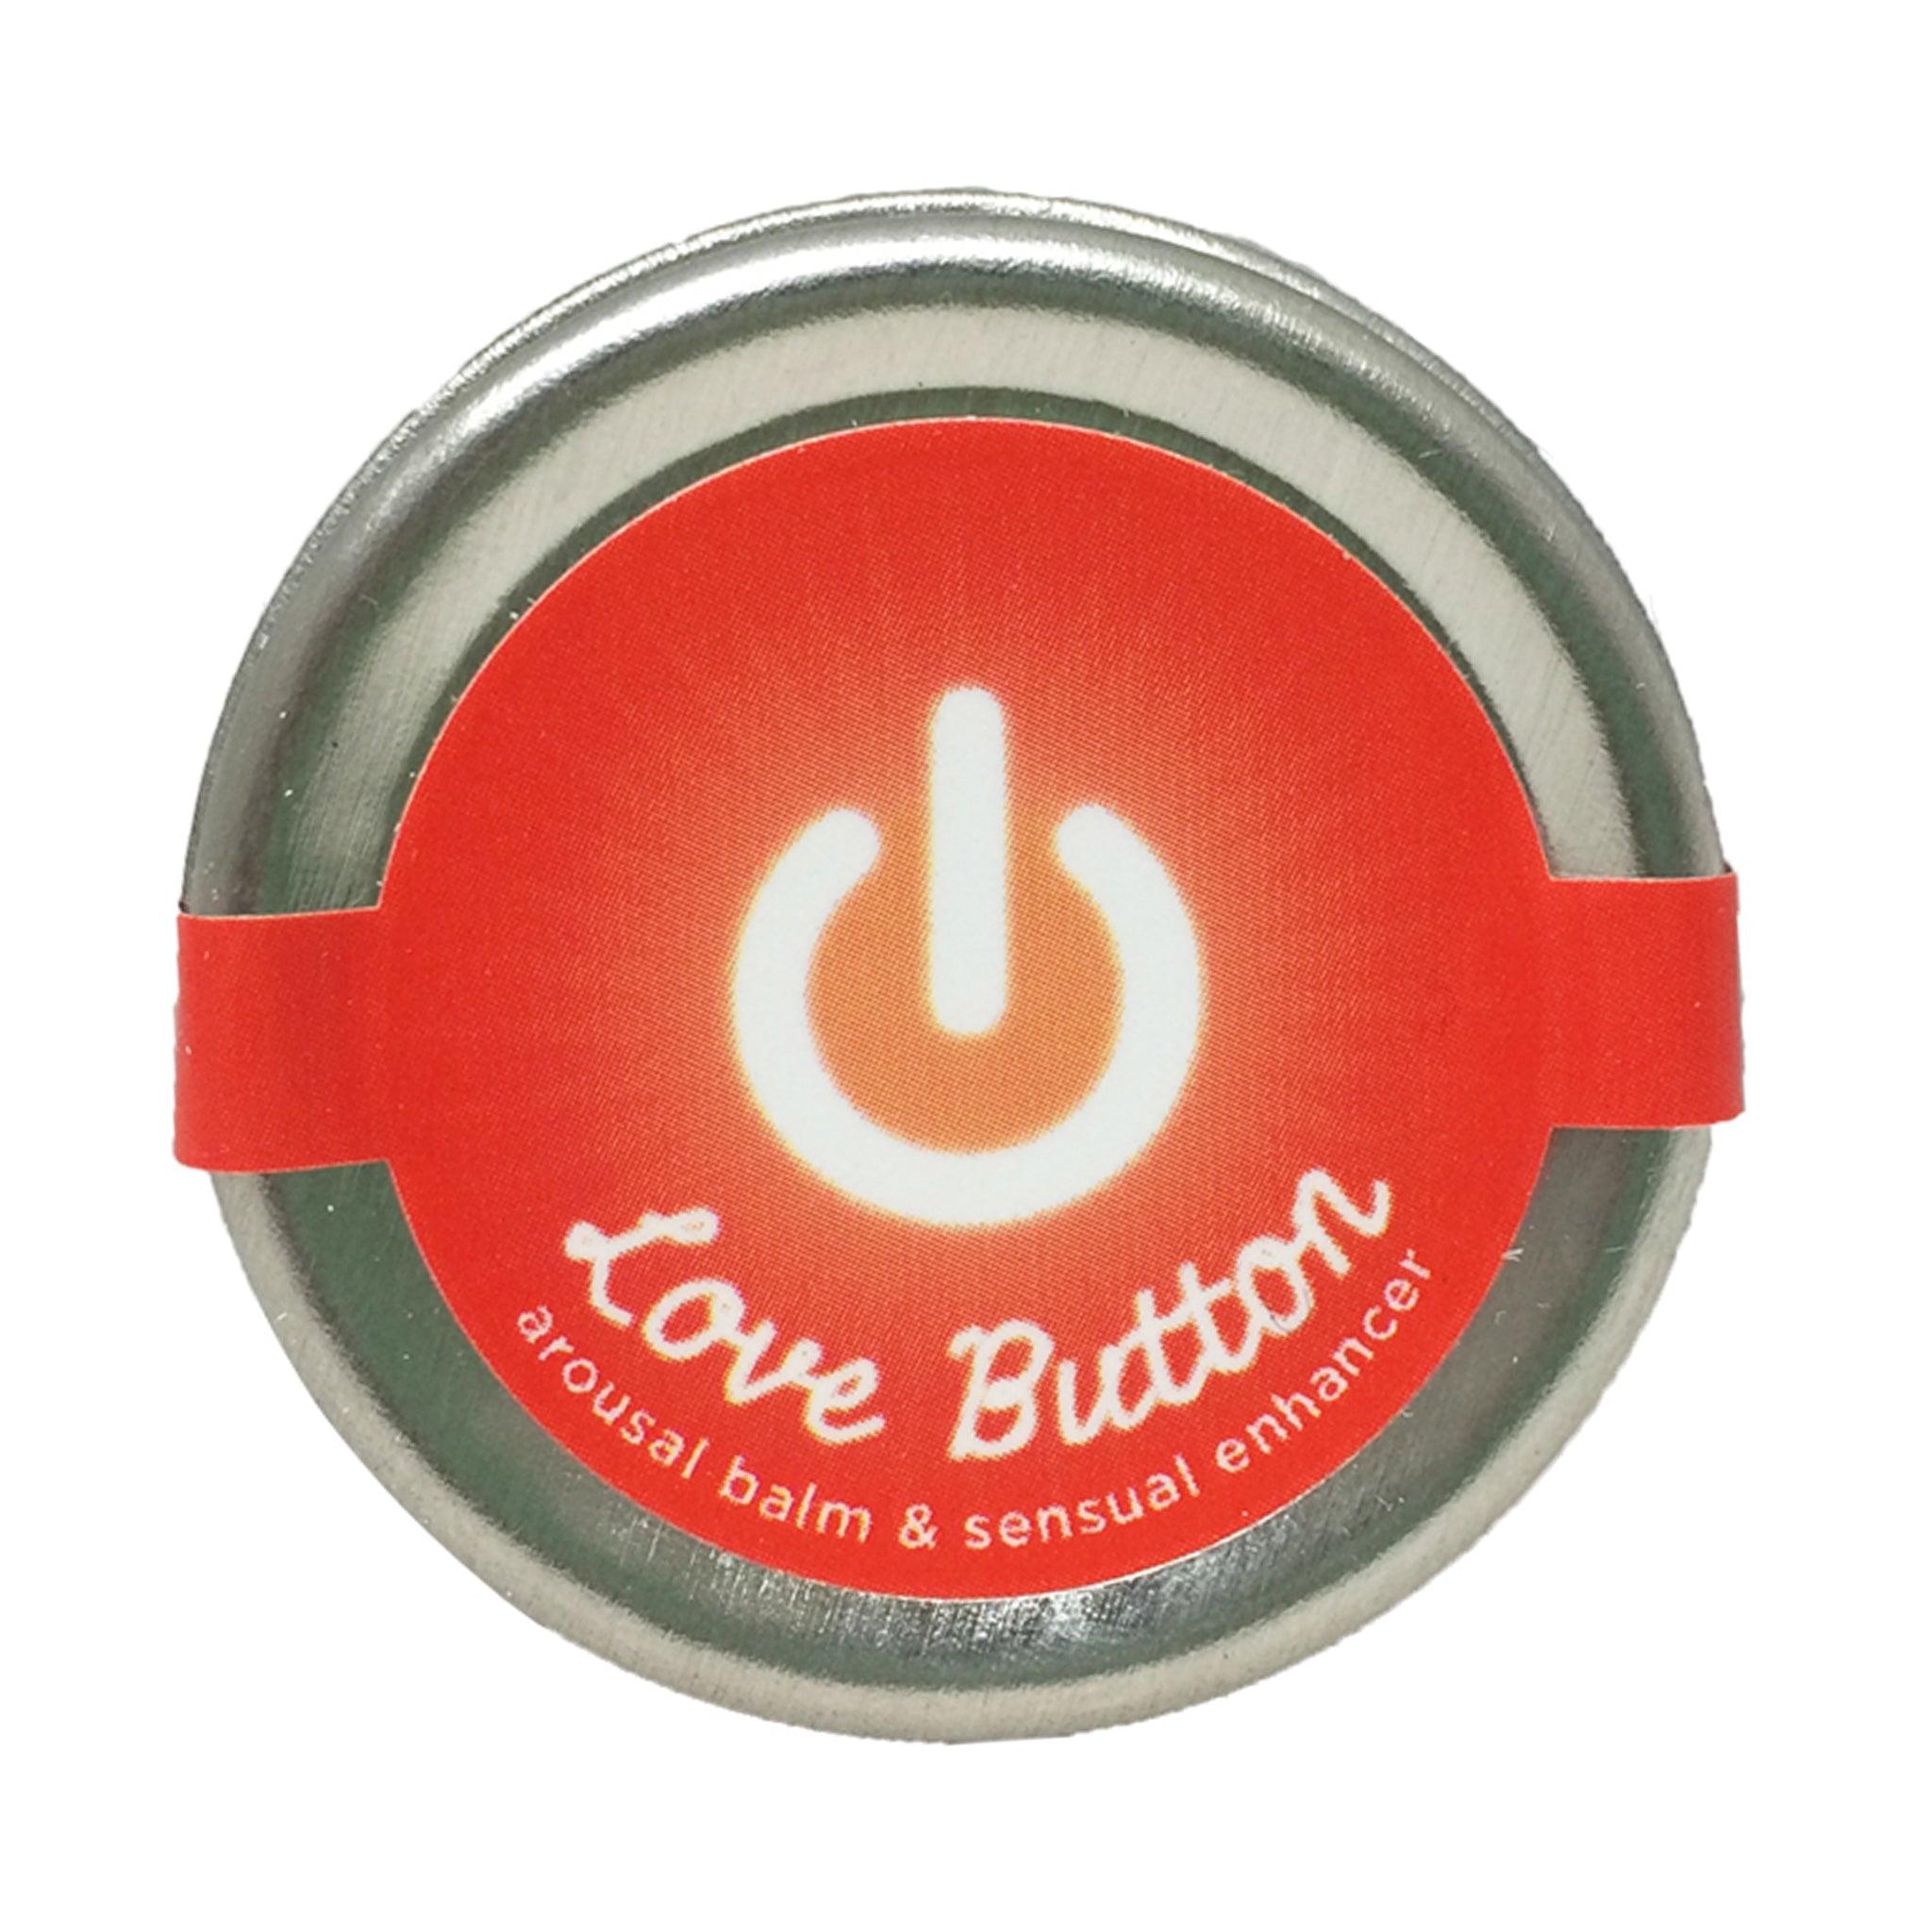 Love Button Arousal Balm by Earthly Body 0.45 oz (12.75 g) - CheapLubes.com